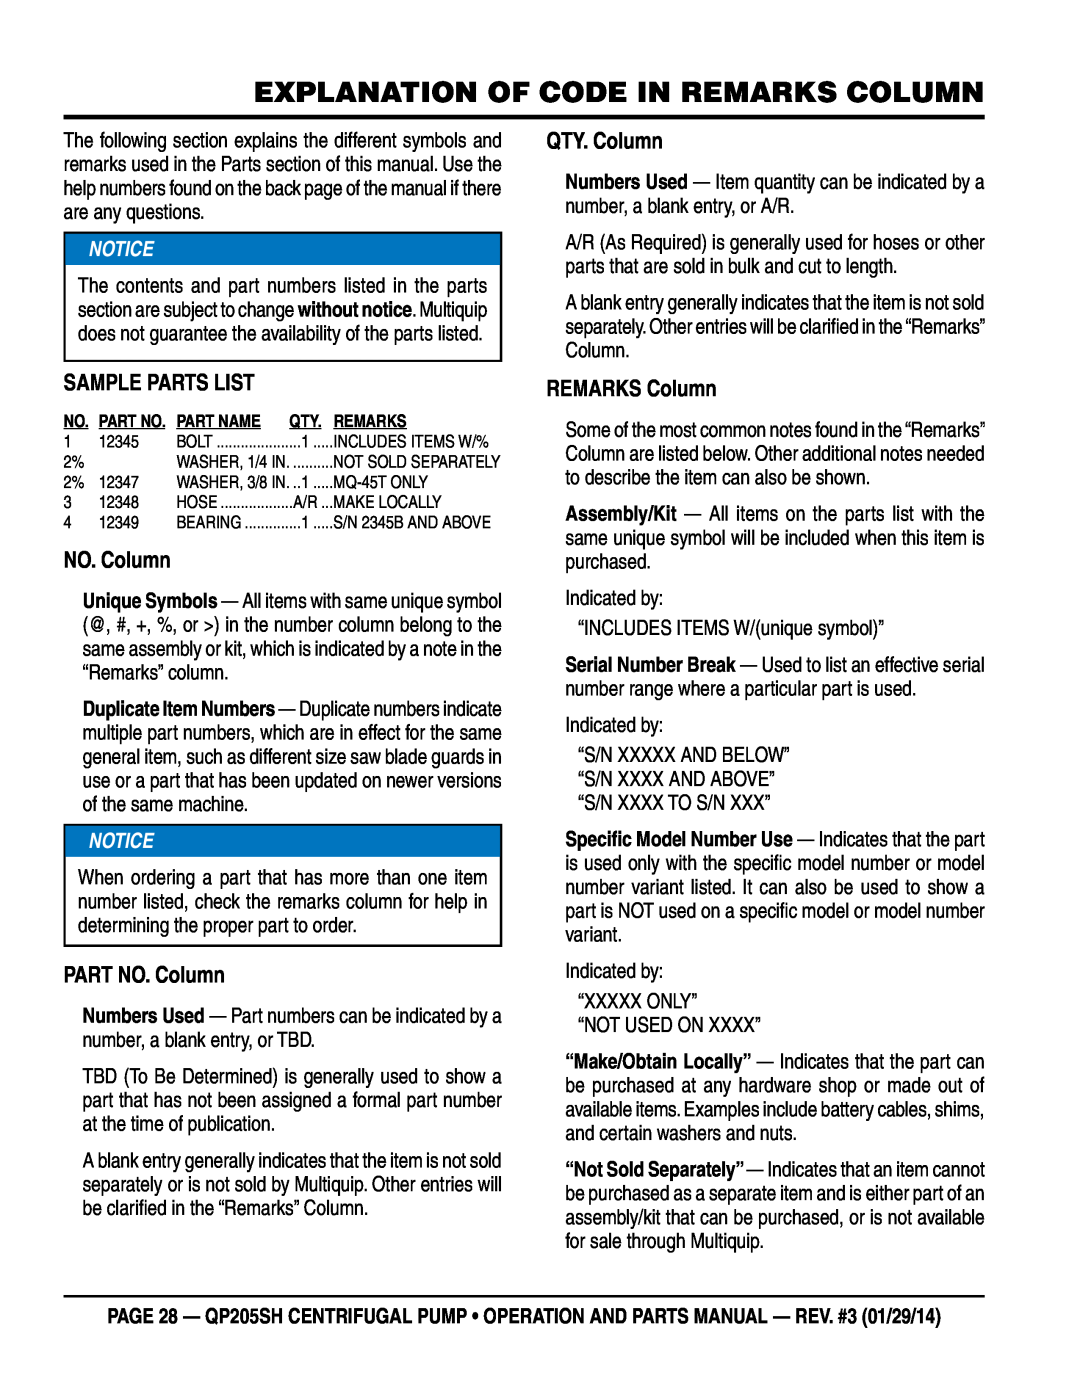 Honda Power Equipment QP205SH Explanation Of Code In Remarks Column, Sample Parts List, PART NO. Column, QTY. Column 